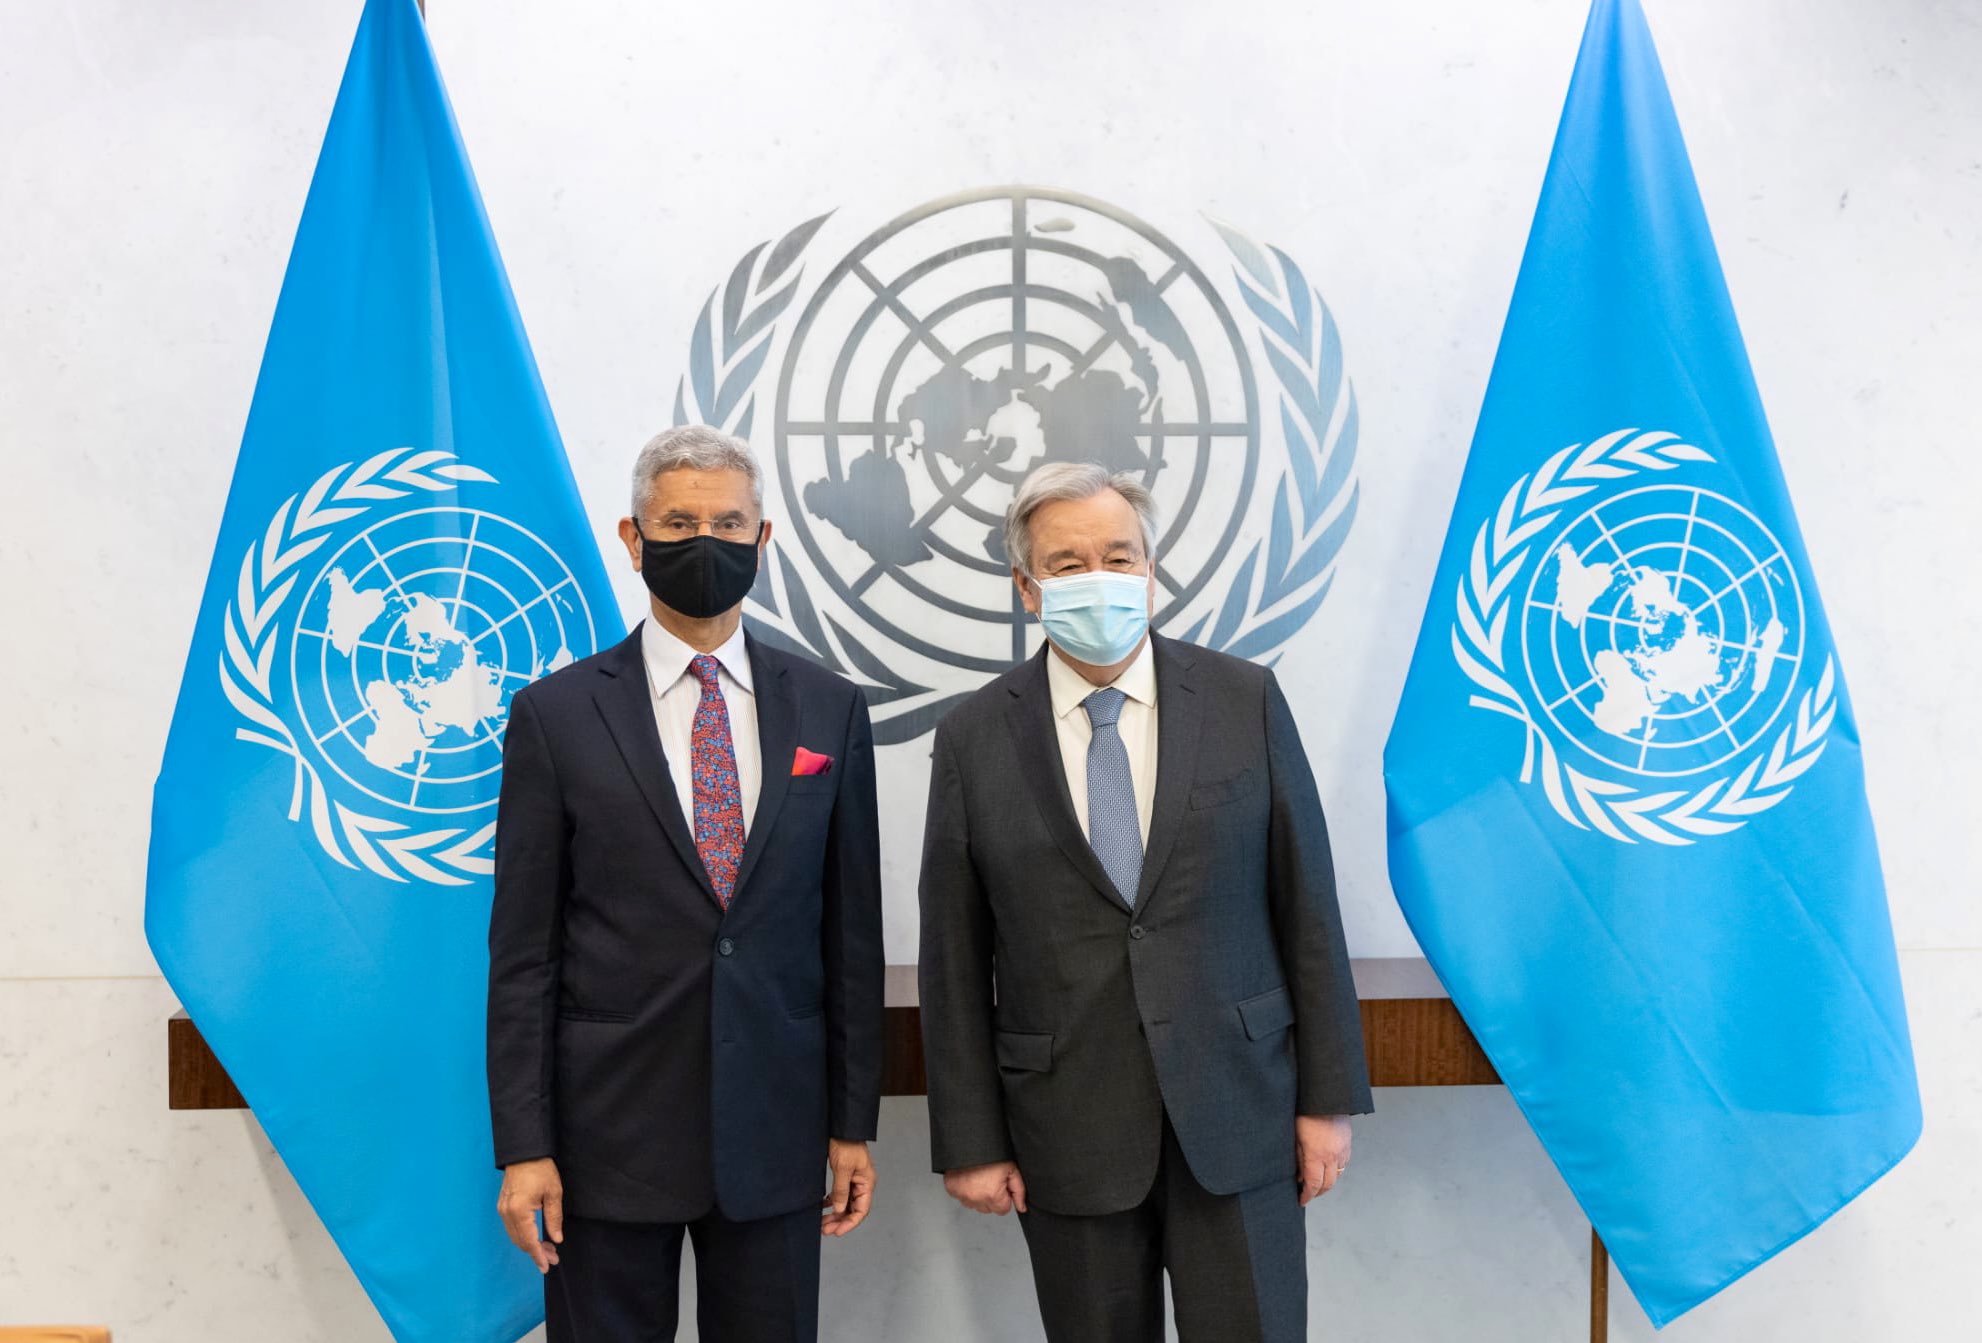 Jaishankar meets UN chief Guterres, discusses key issues including Ukraine situation